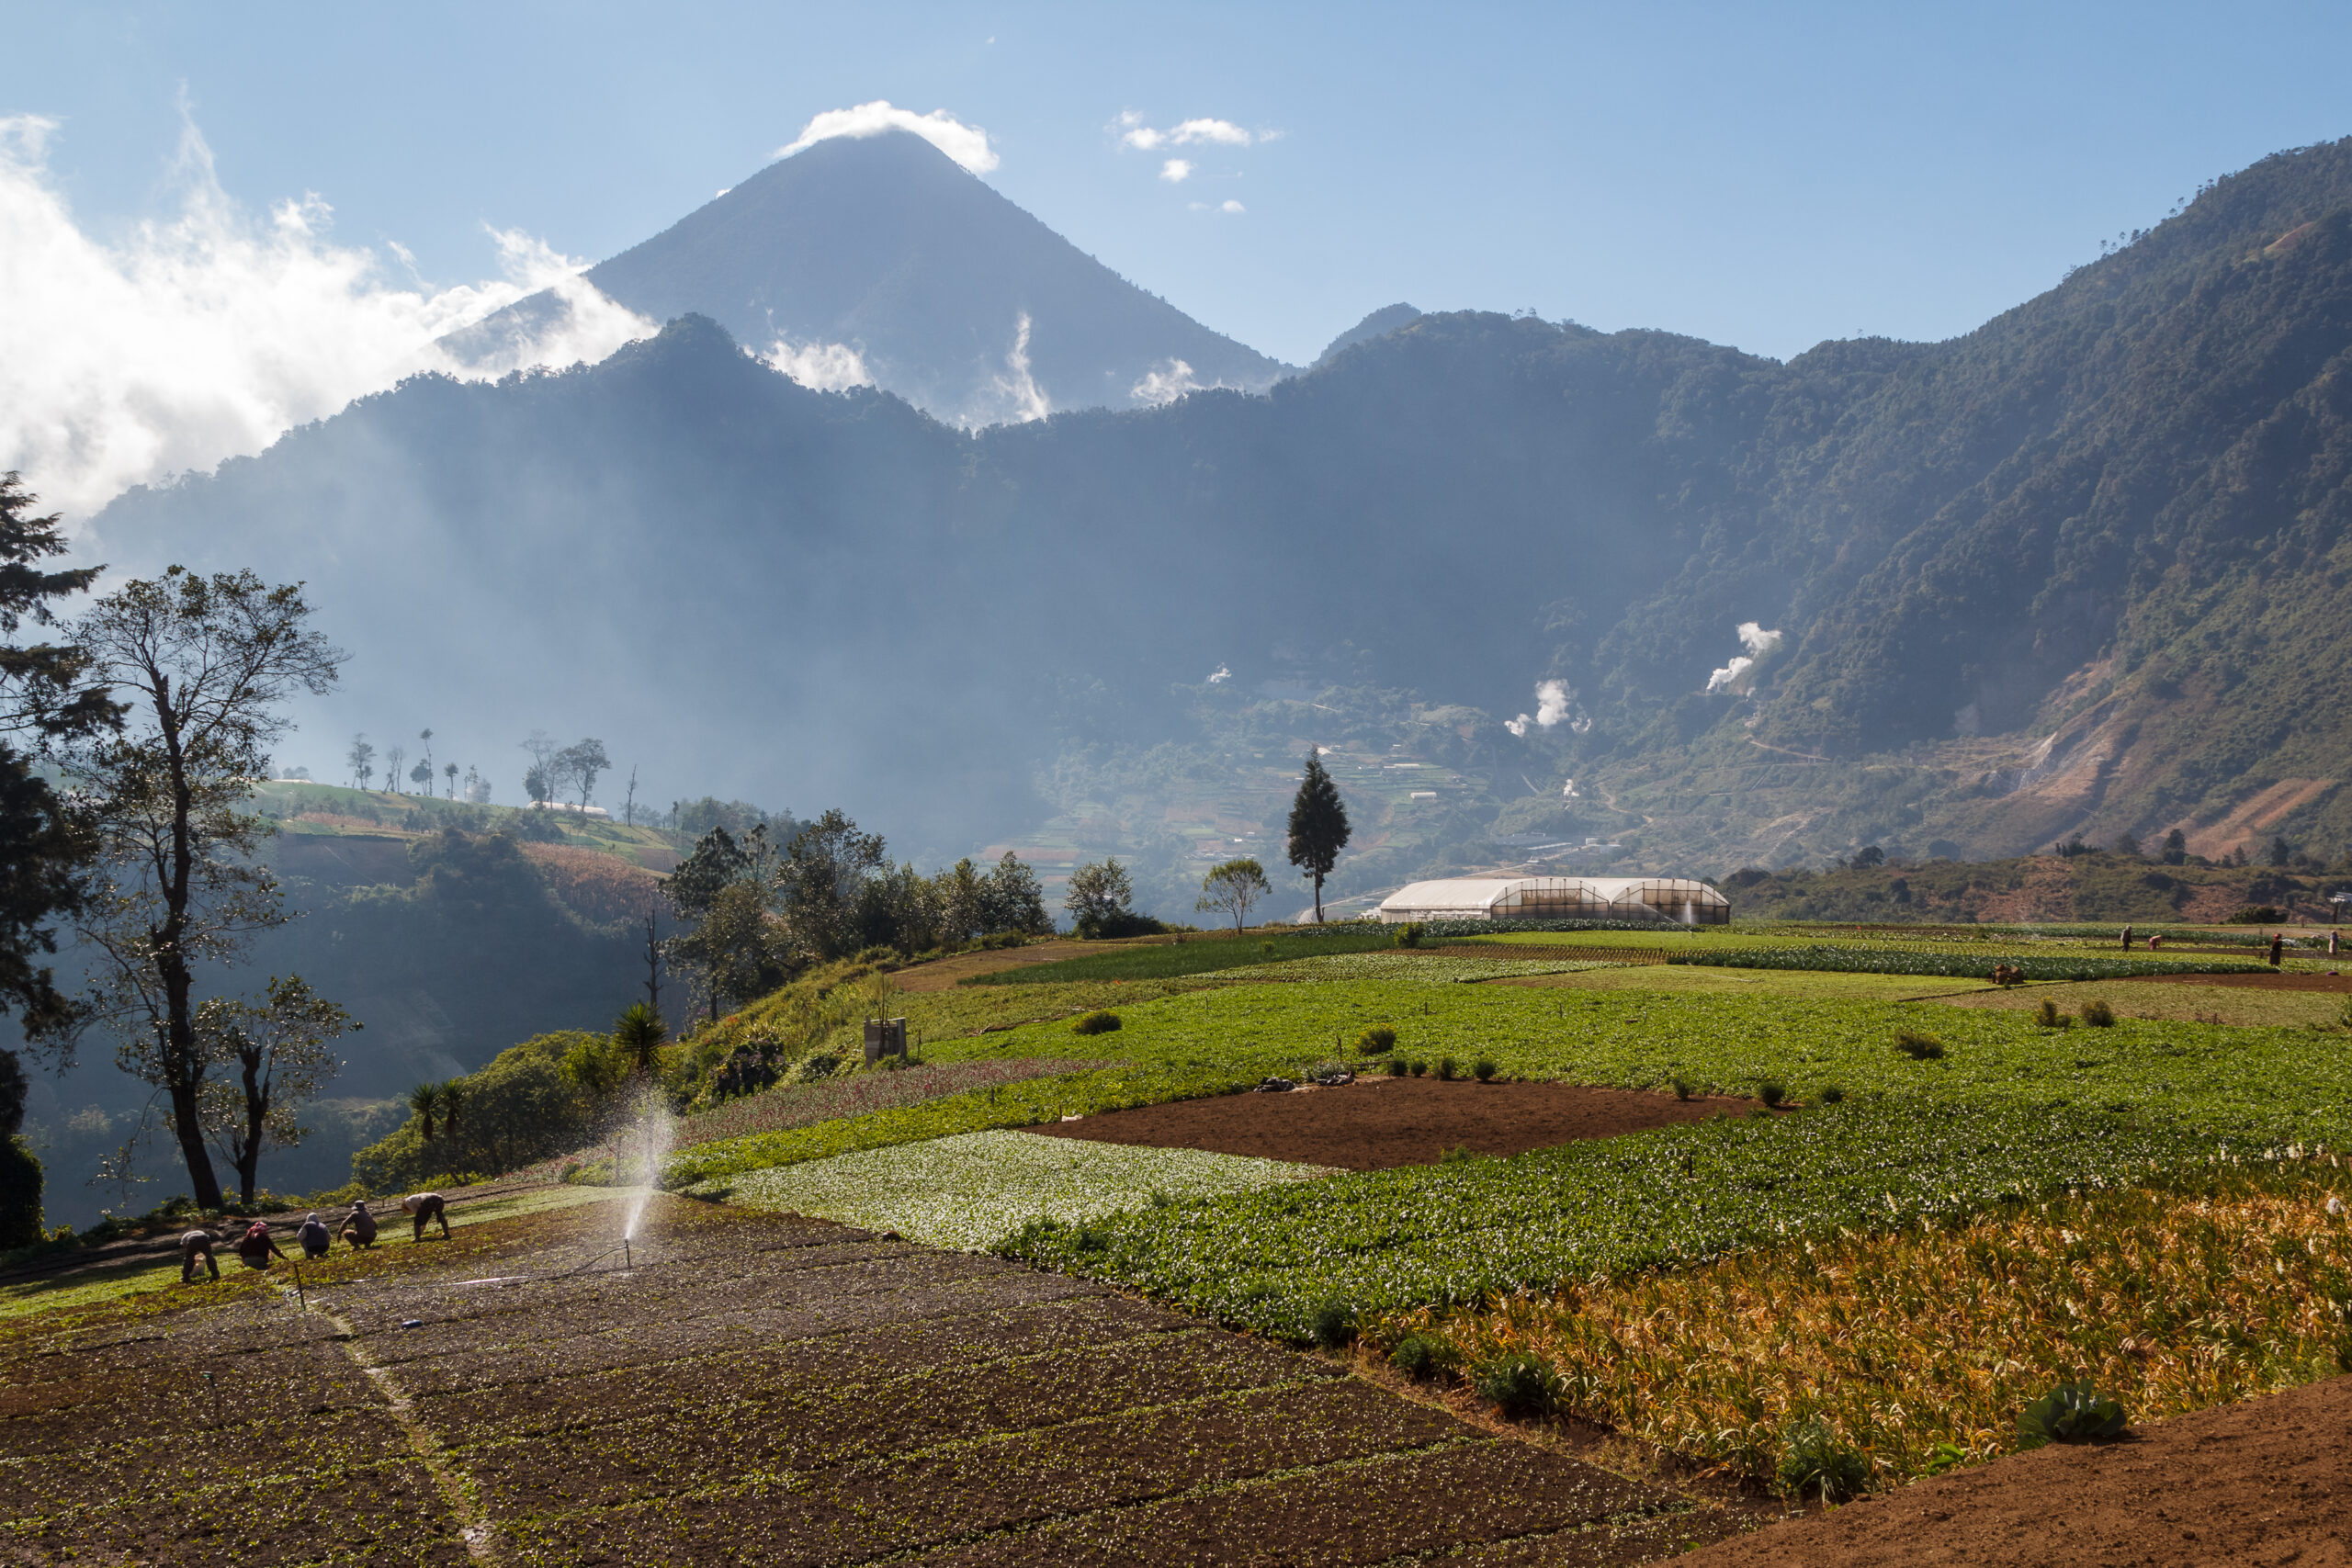 Accreditation supports organic production in Guatemala